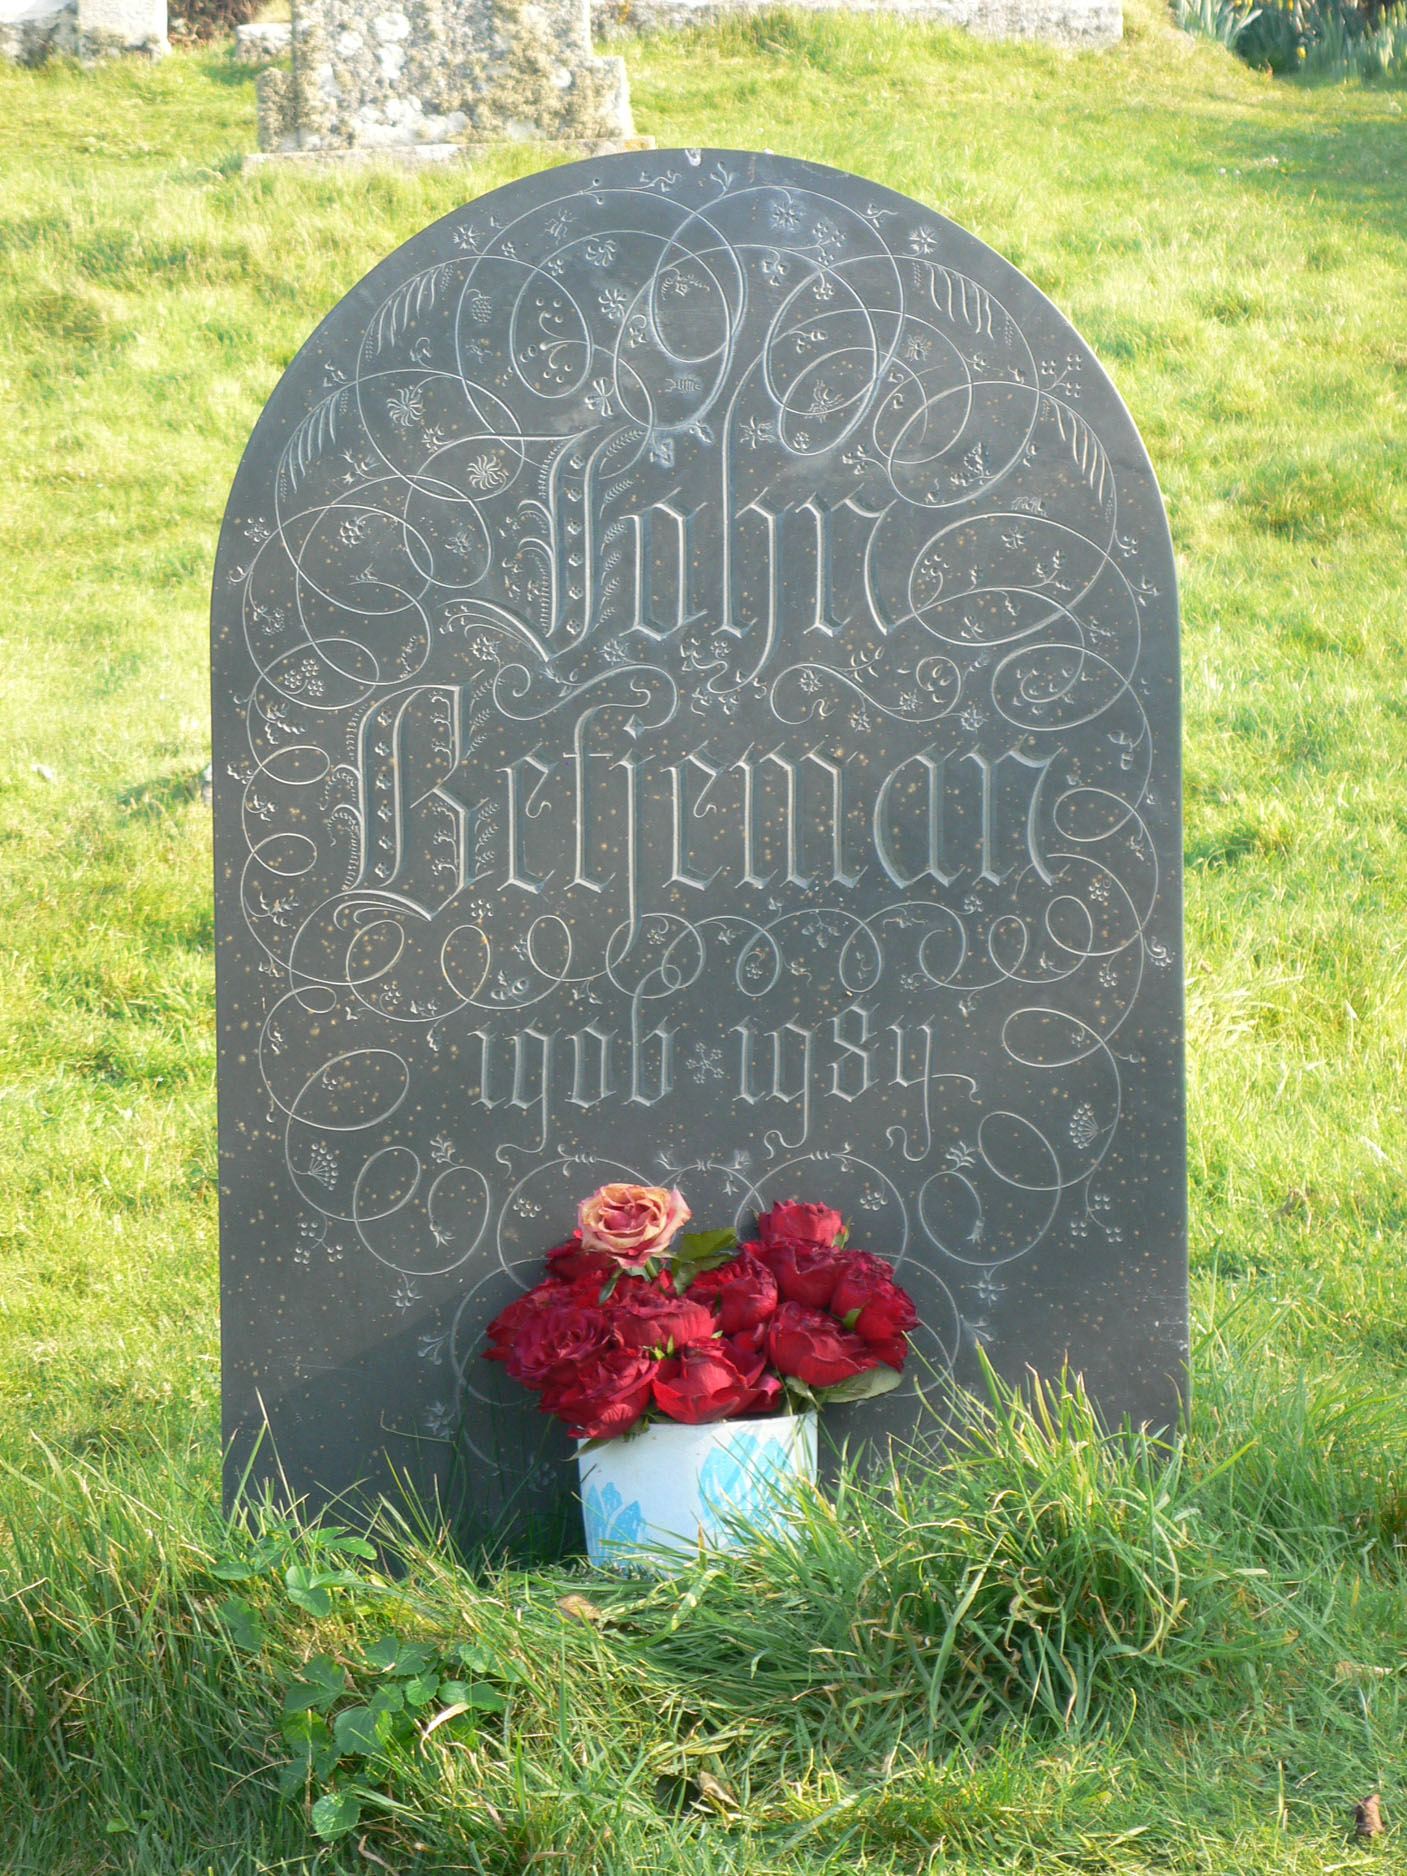 John Betjemans headstone at St Enodoc church